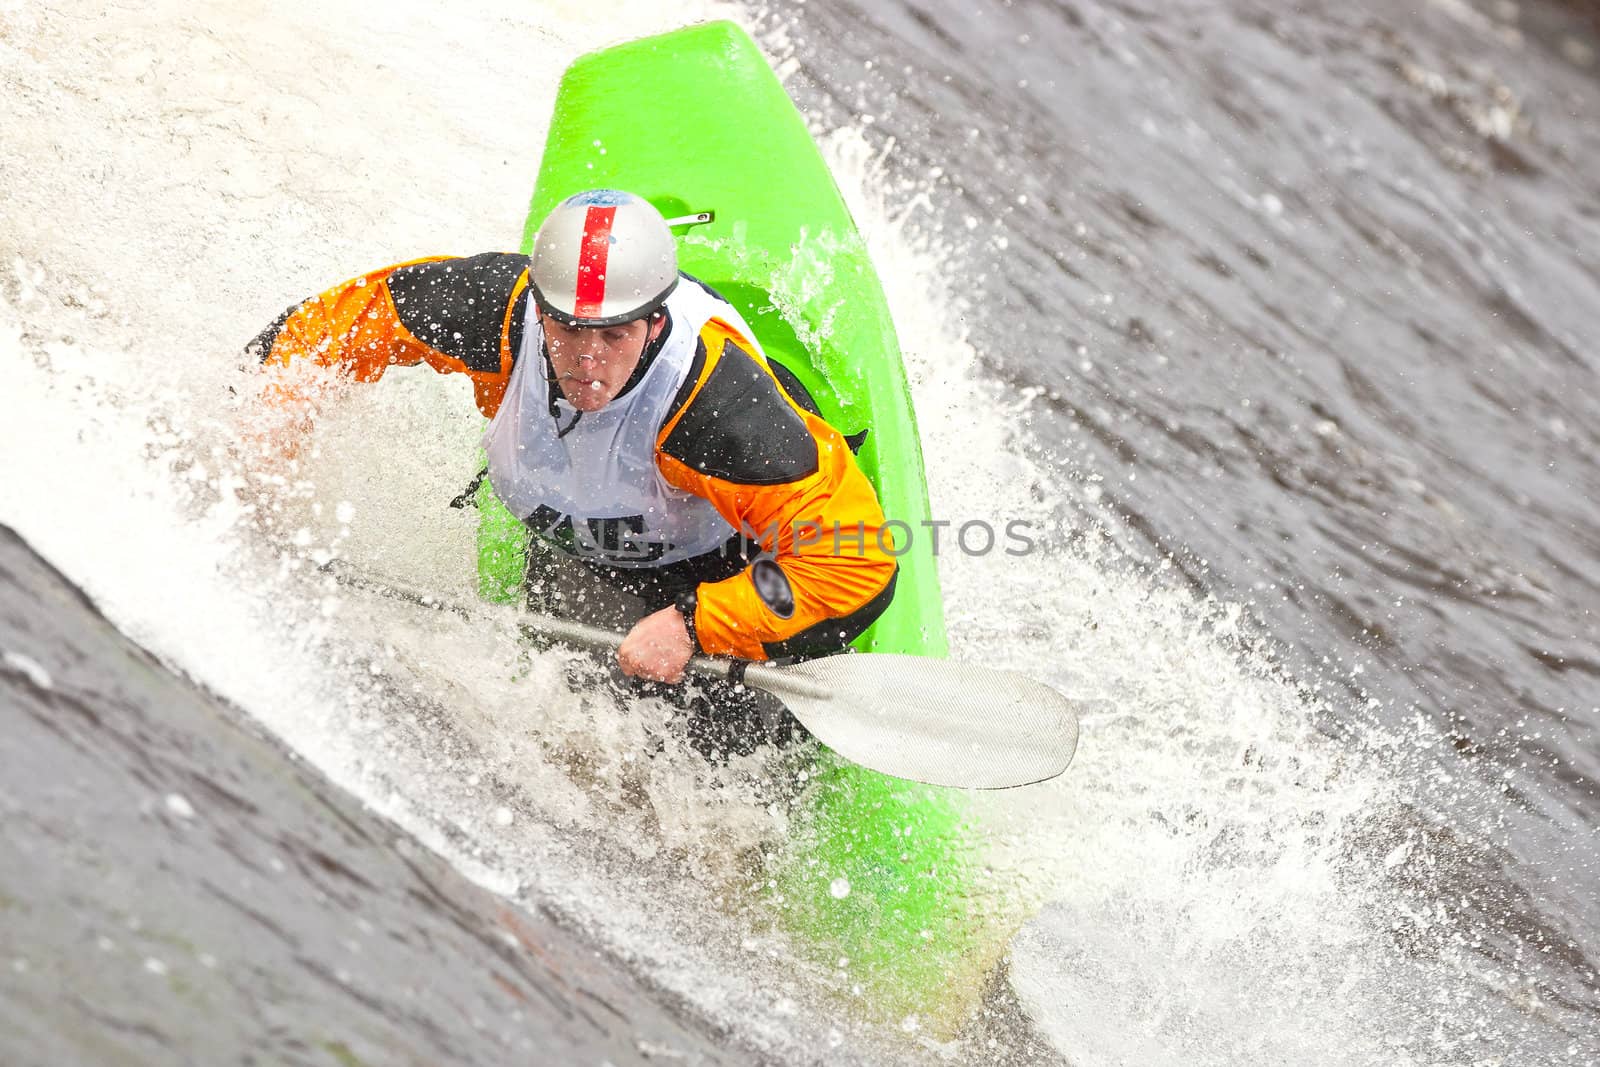 Kayak freestyle on whitewater, Russia, Msta, may 2010